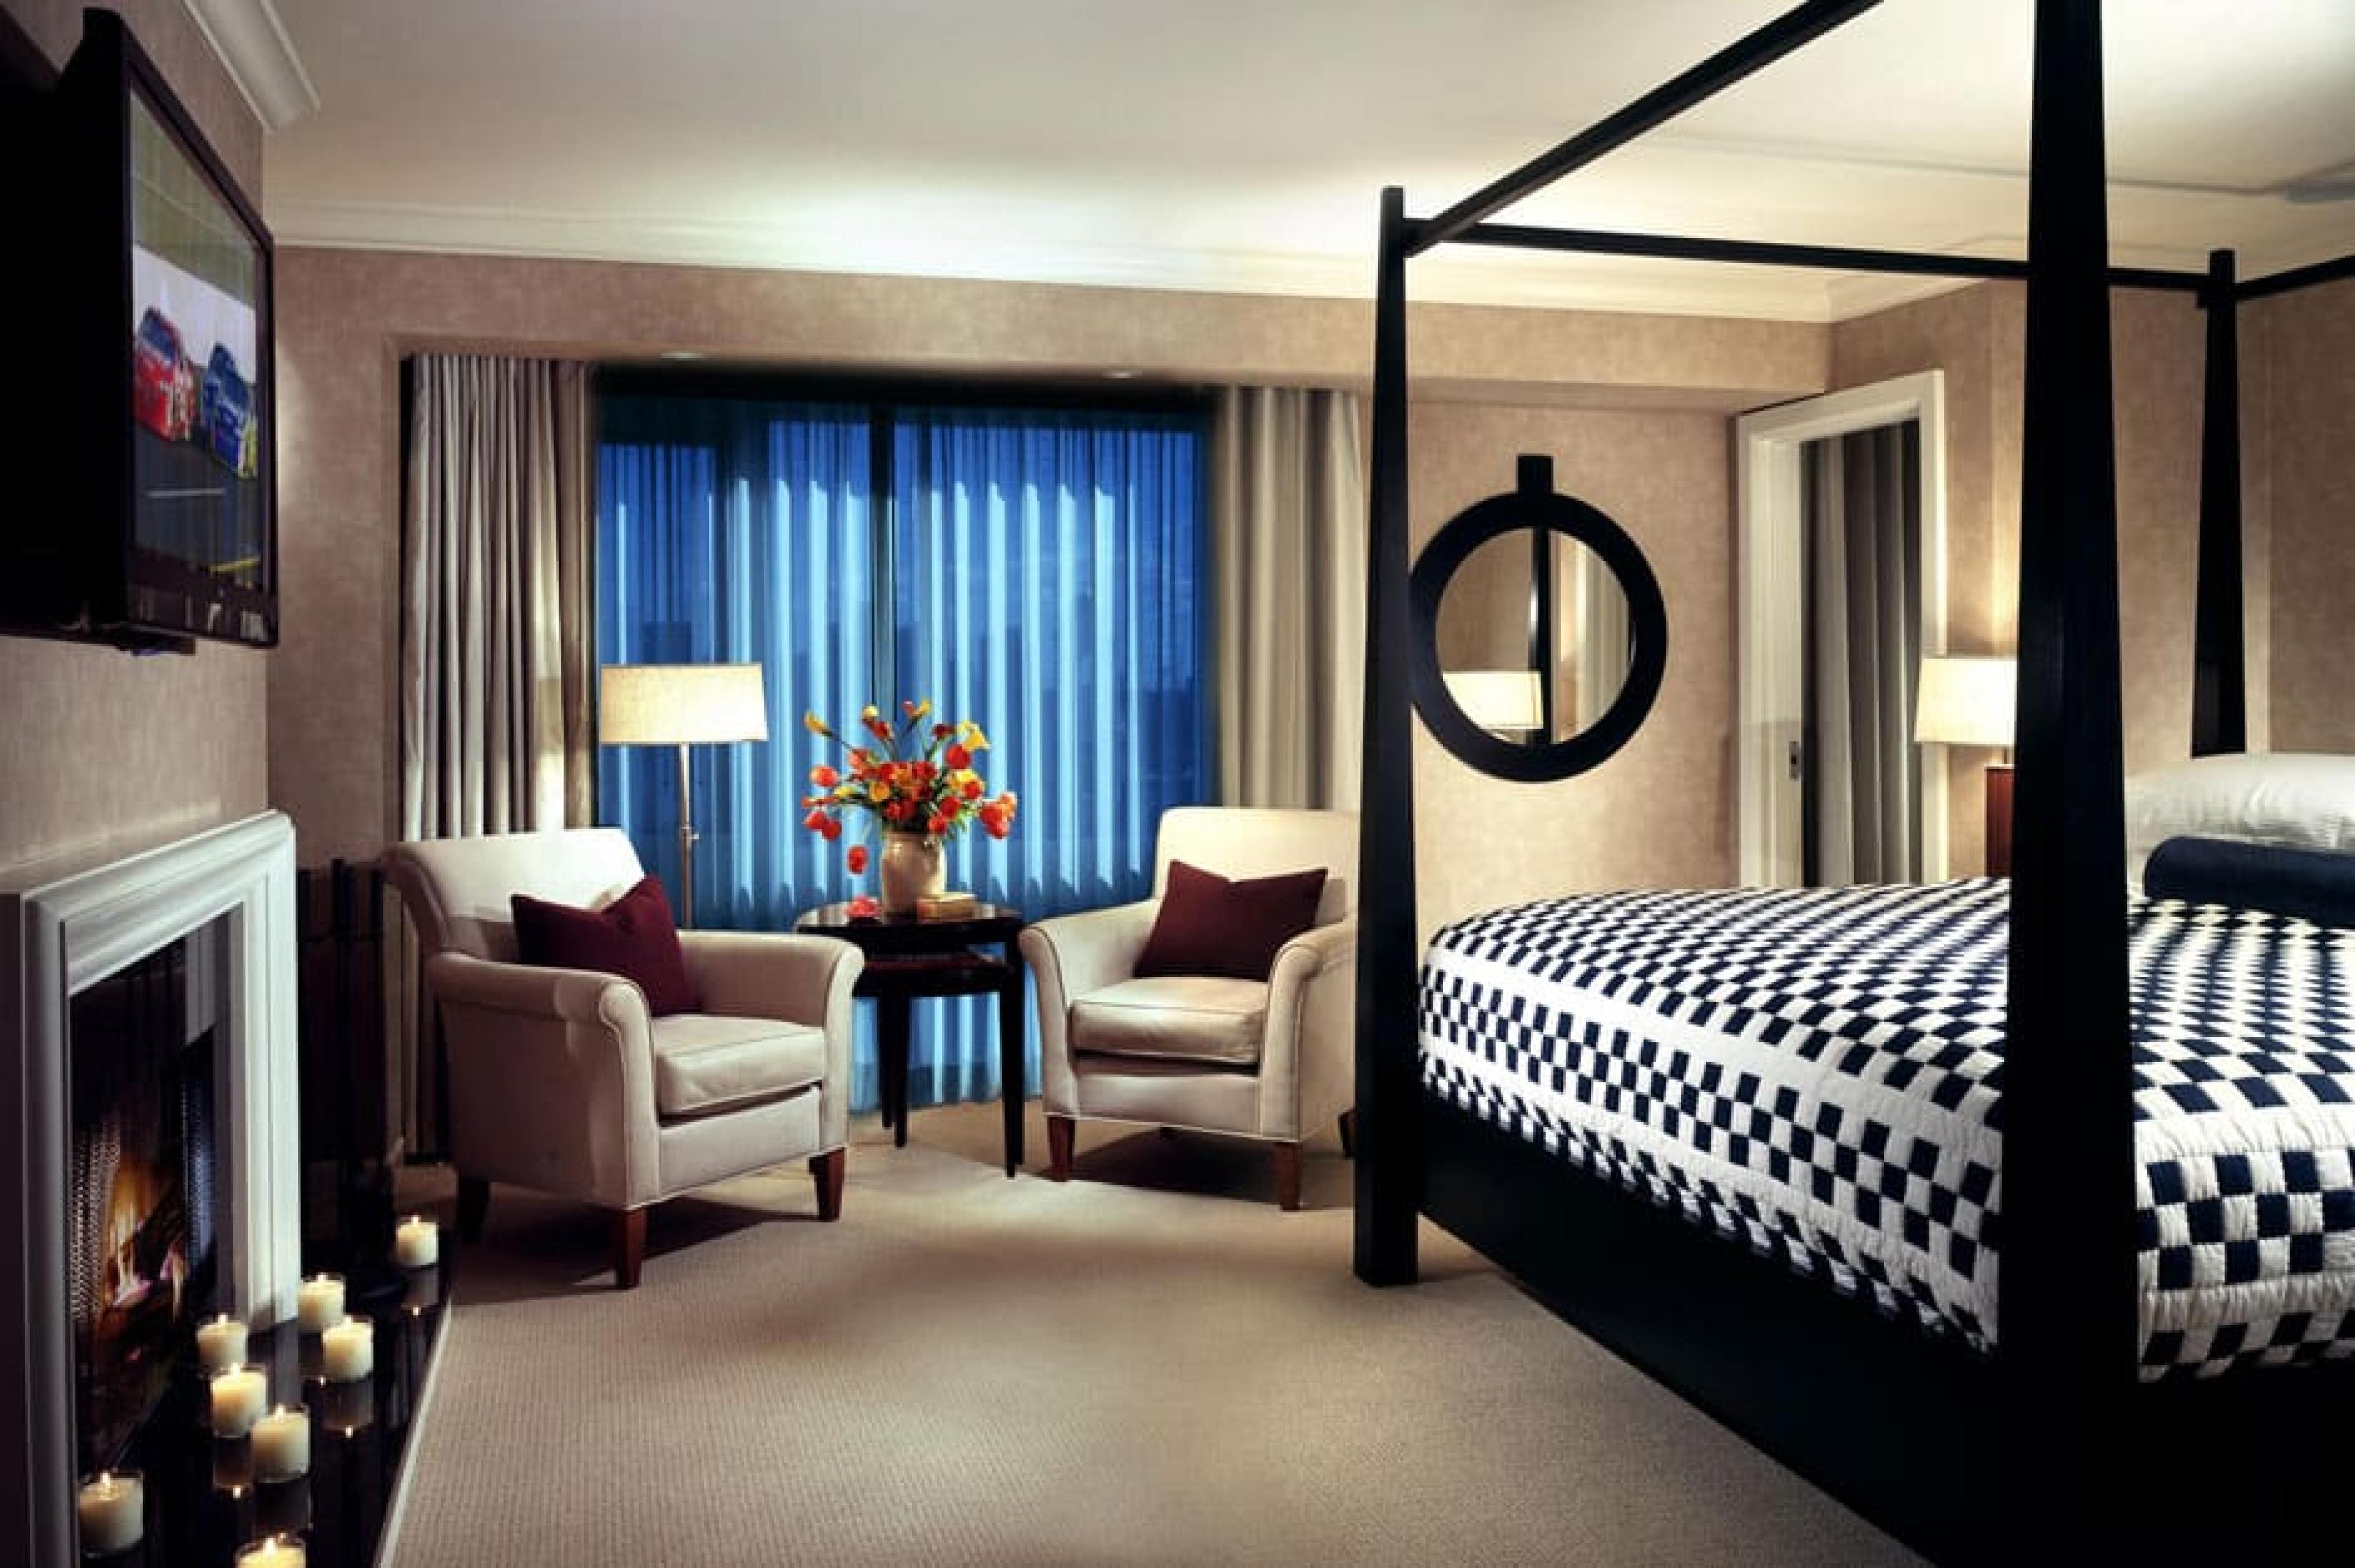 Bedroom at Charles Hotel, Boston, New England